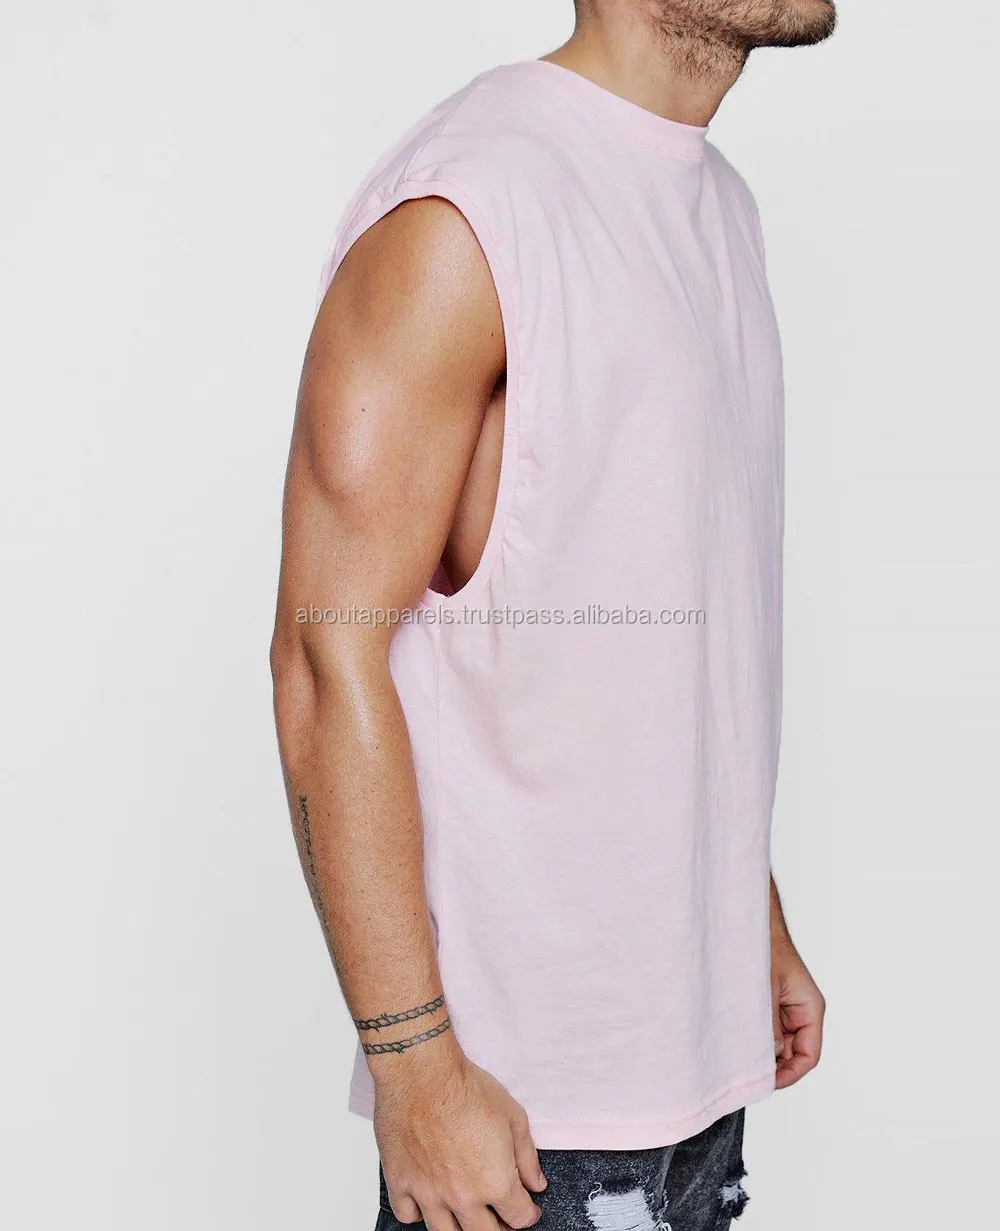 Fitwise Men's Vests Regular Fit Tank Tops 100% Cotton Summer Training Gym Purple 